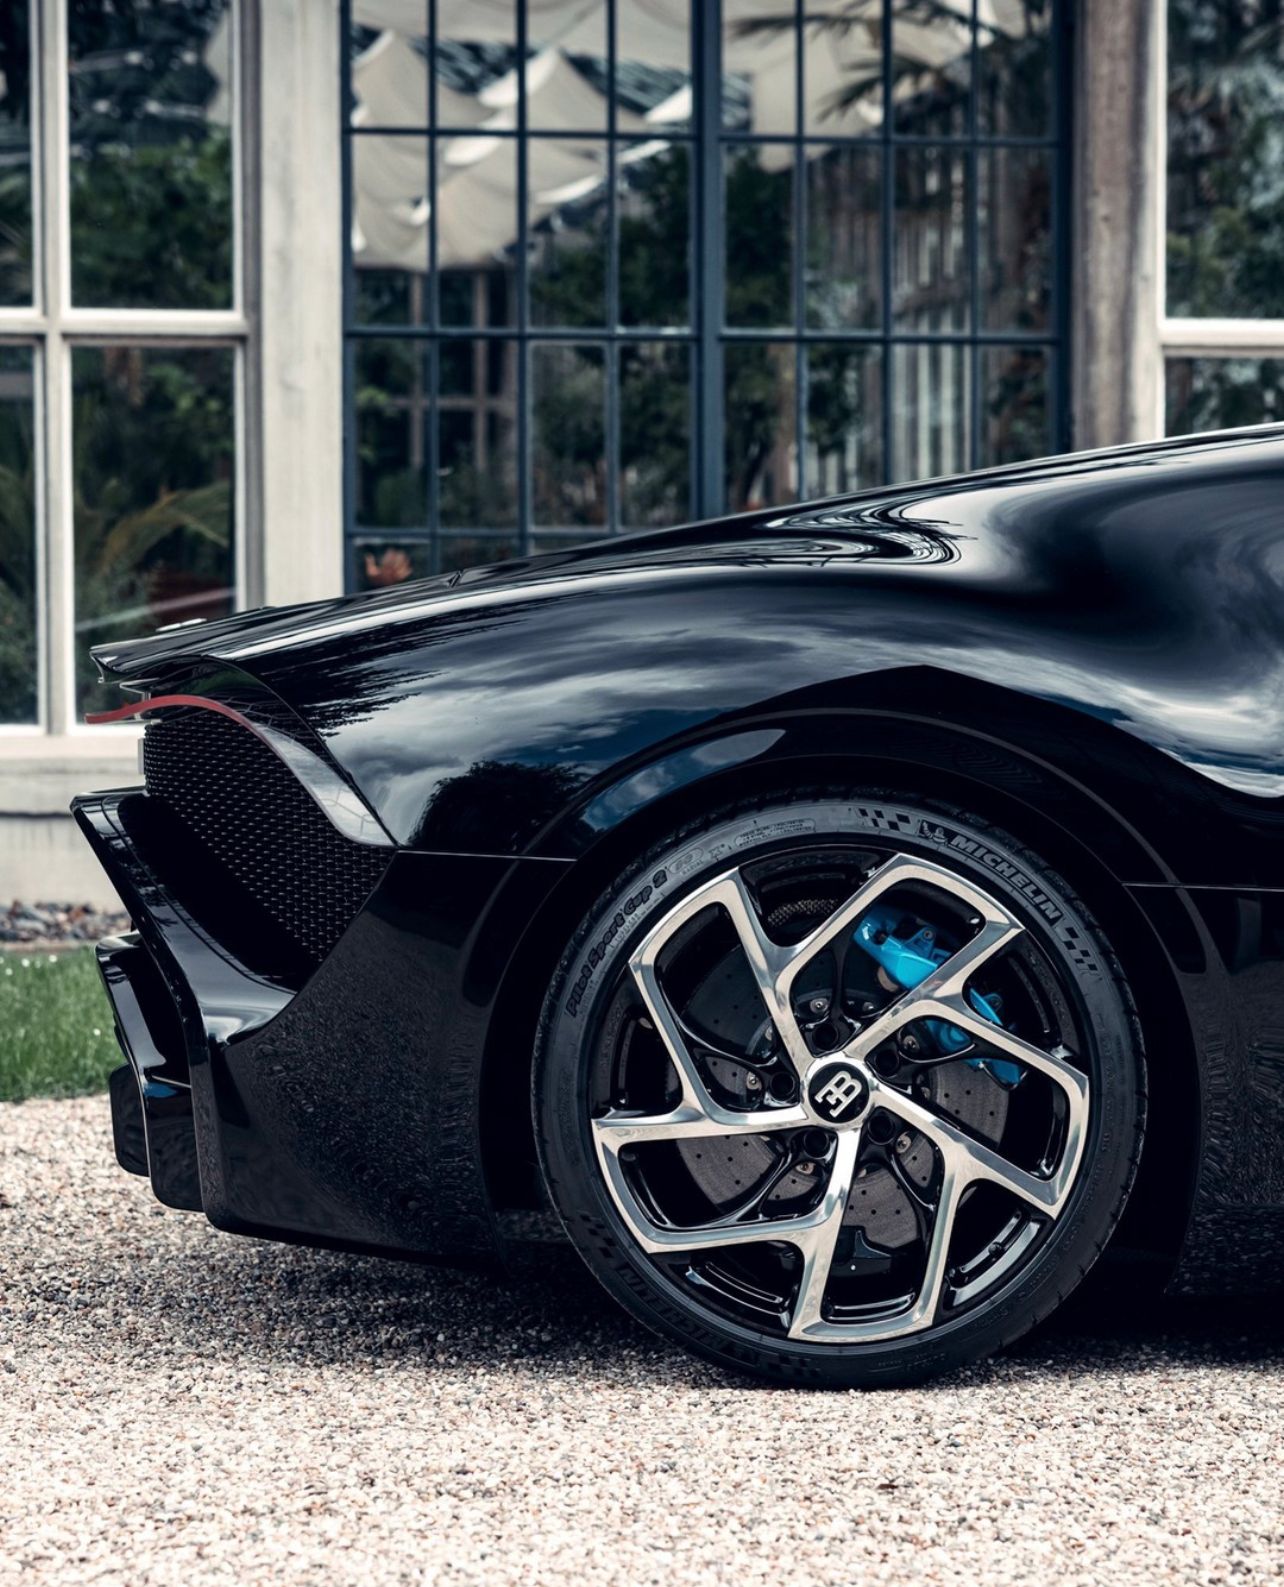 Wheels of Bugatti La Voiture Noire